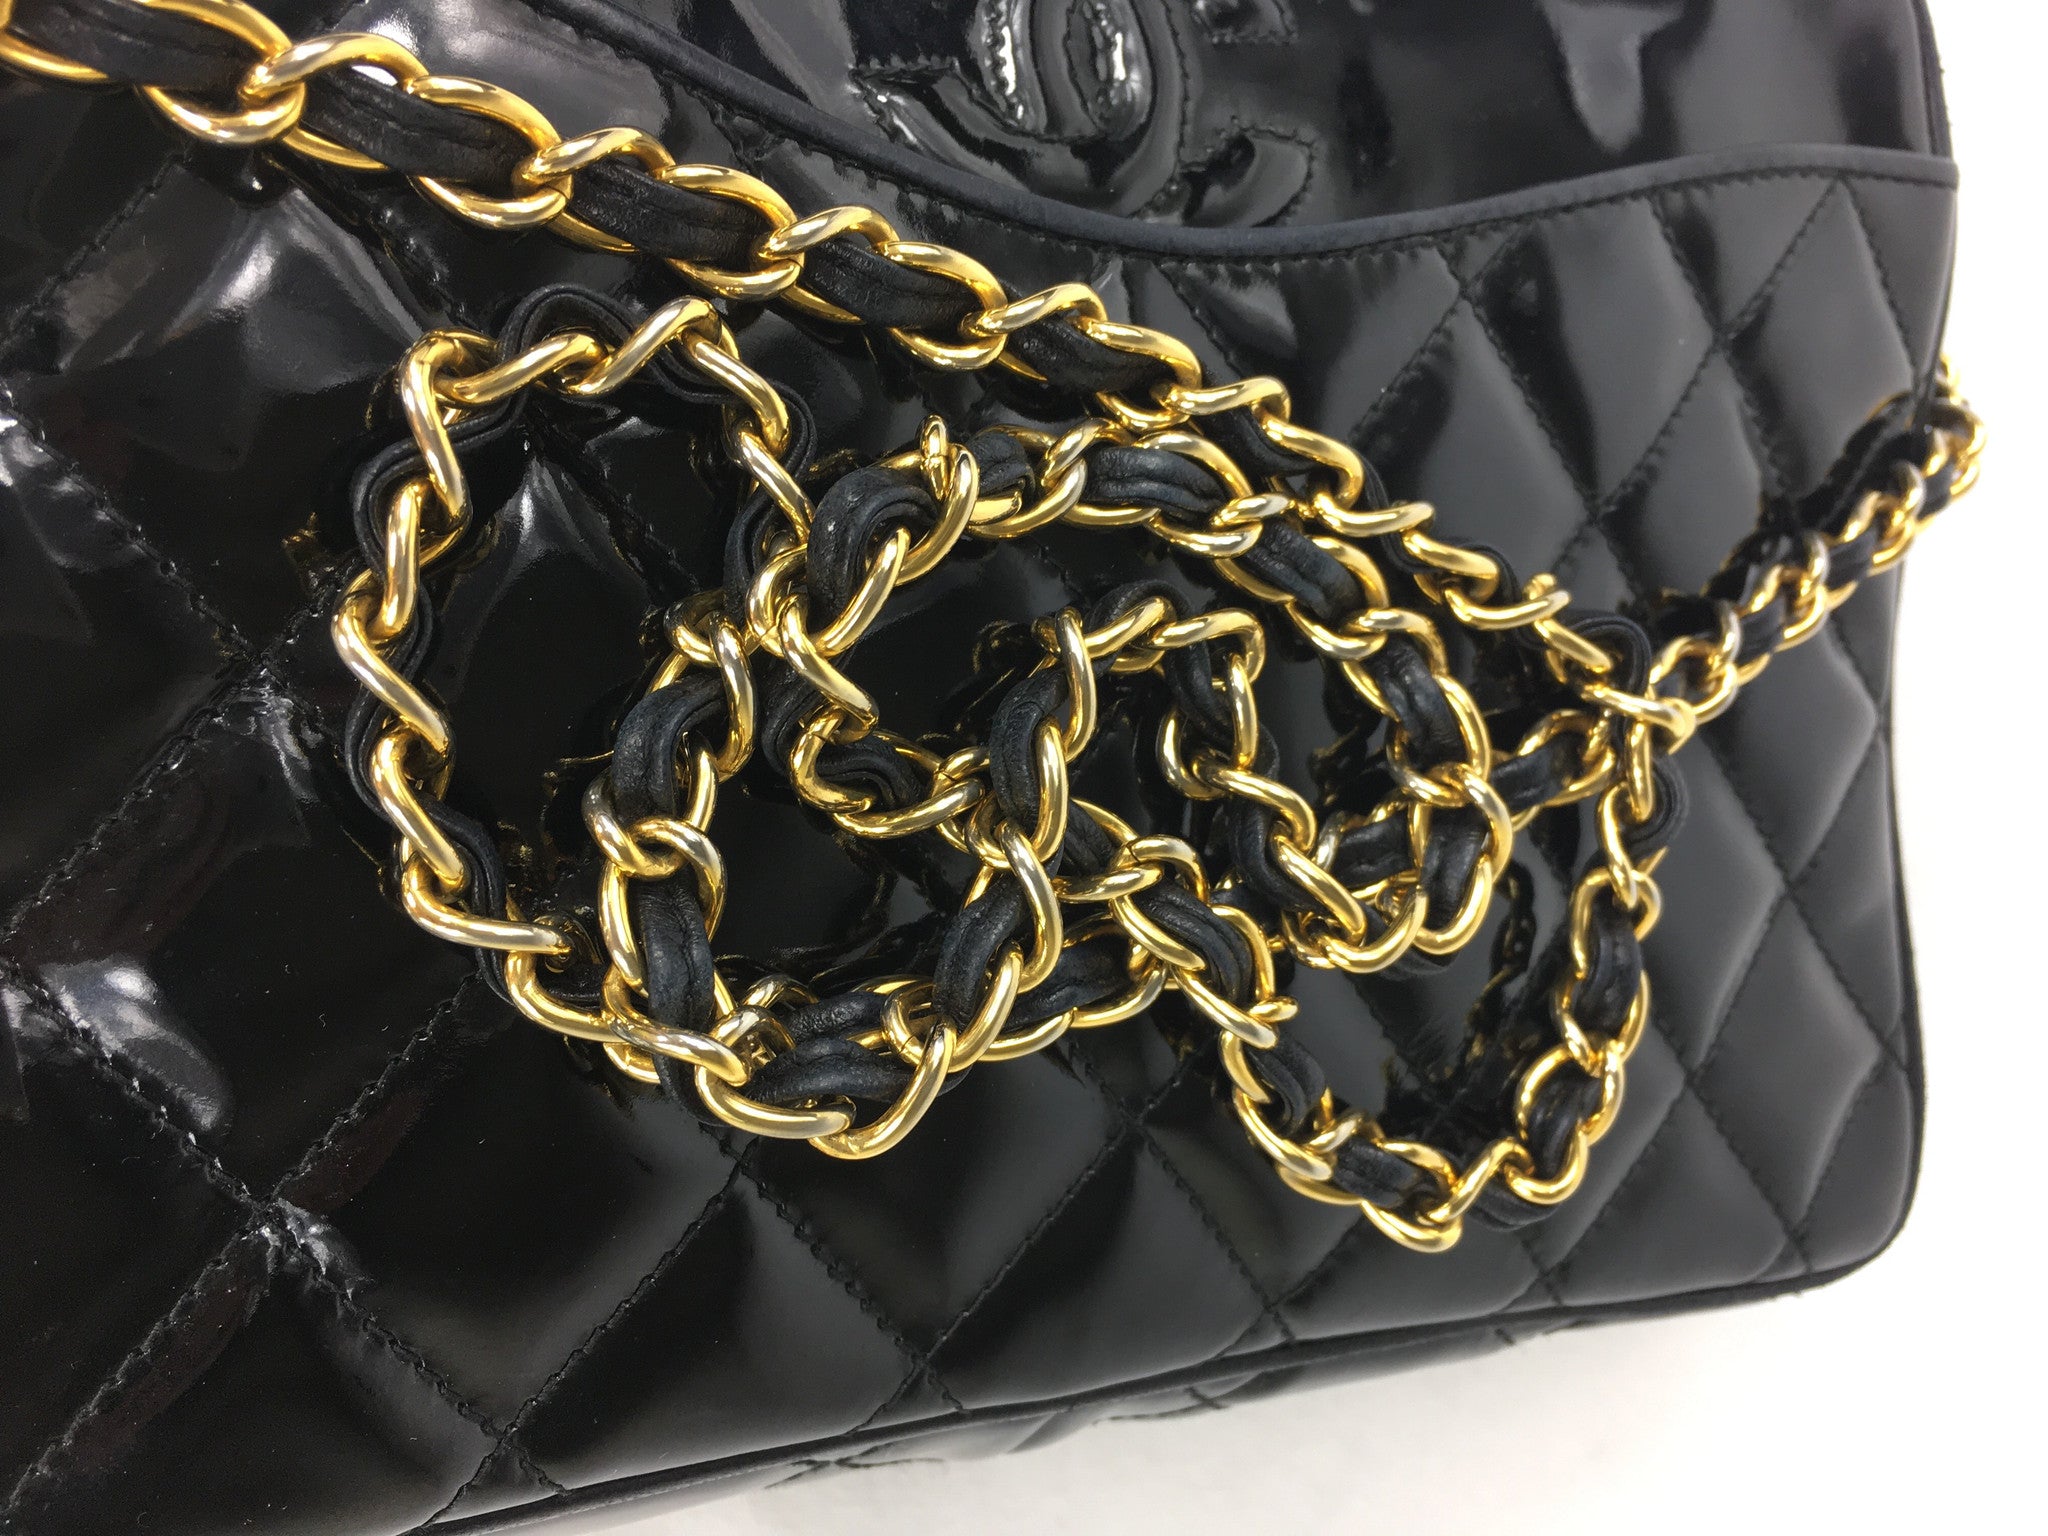 CHANEL Black Patent Leather Crossbody Bag